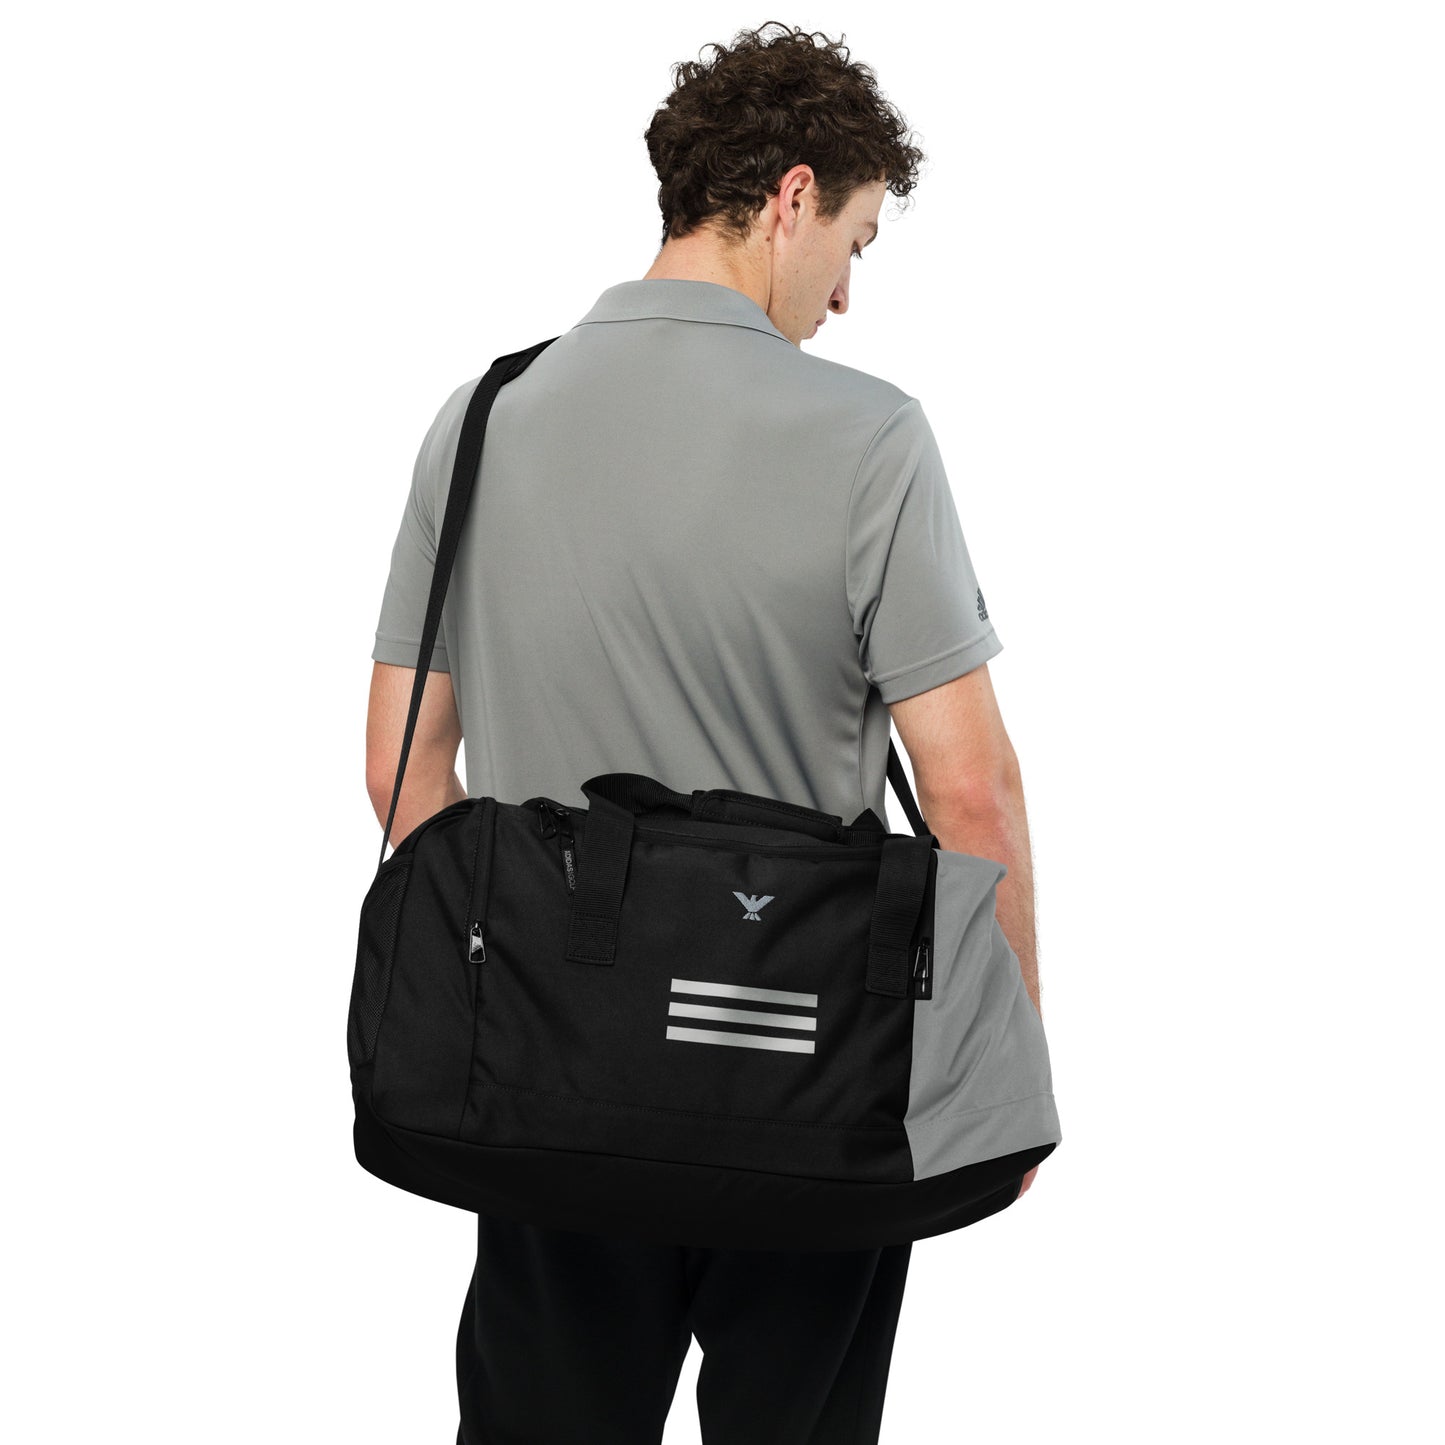 Cline X Adidas Eco-Friendly Duffle Bag